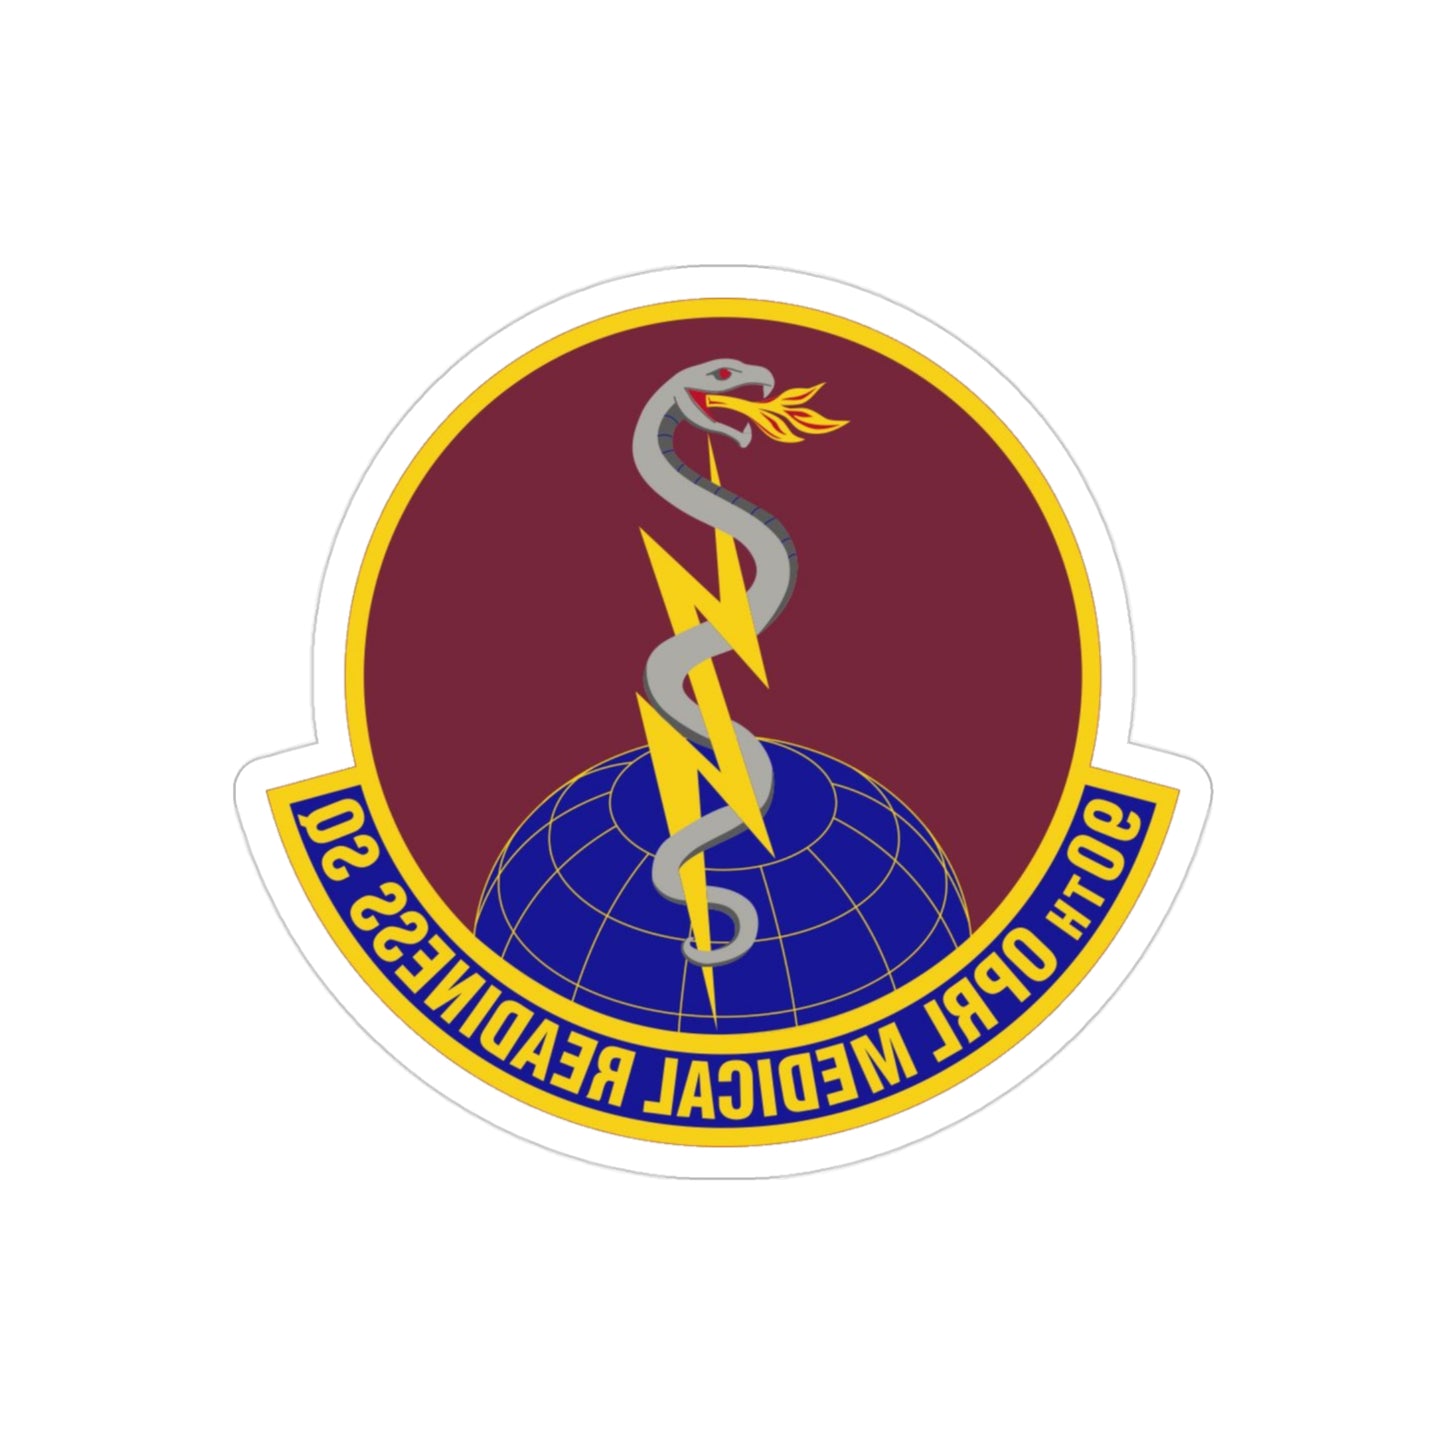 90 Operational Medical Readiness Squadron AFGSC (U.S. Air Force) REVERSE PRINT Transparent STICKER